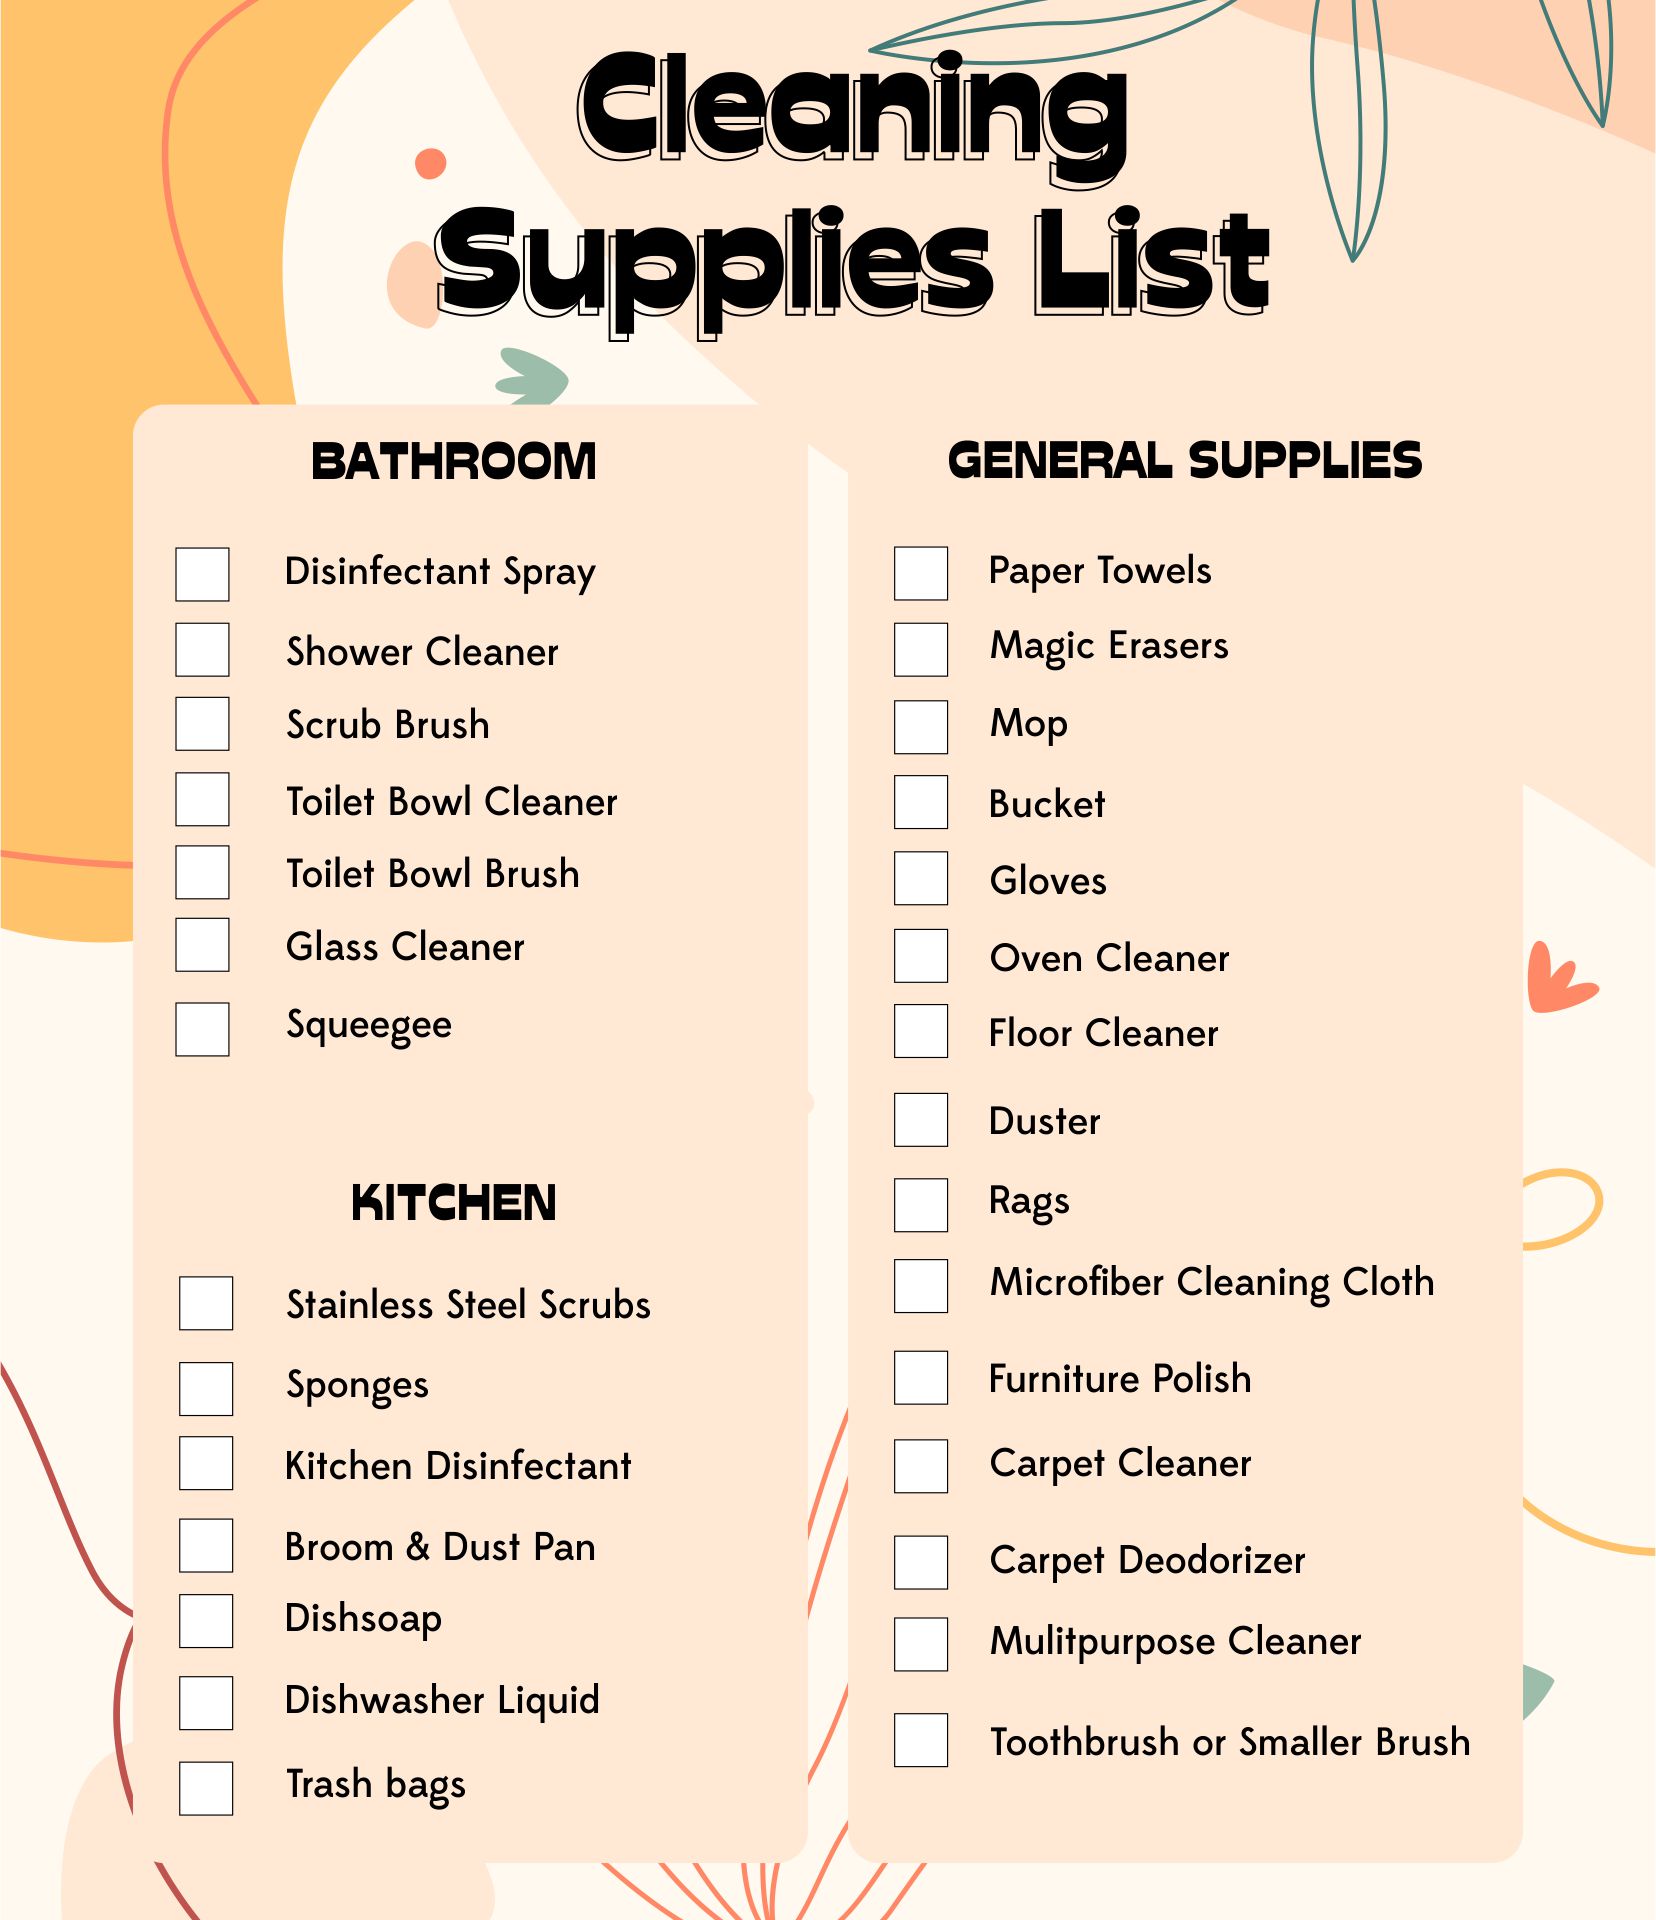 Printable Household Items List